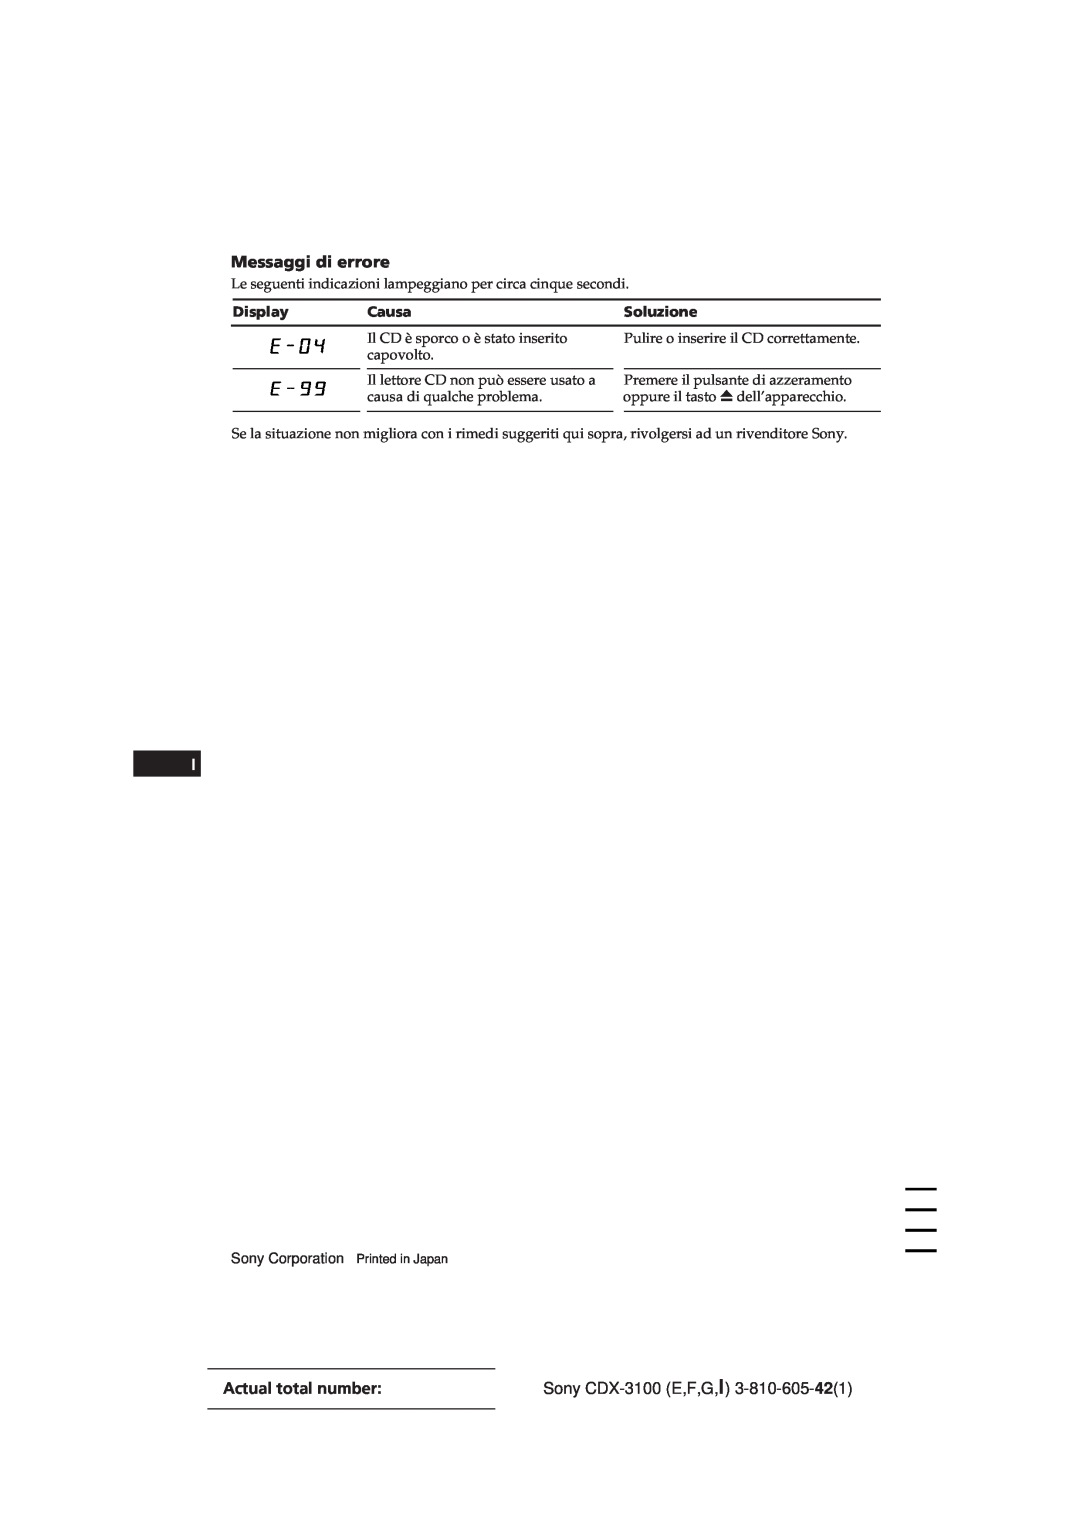 Sony CDX-3100 manual Messaggi di errore, Actual total number, Display, Causa, Soluzione 